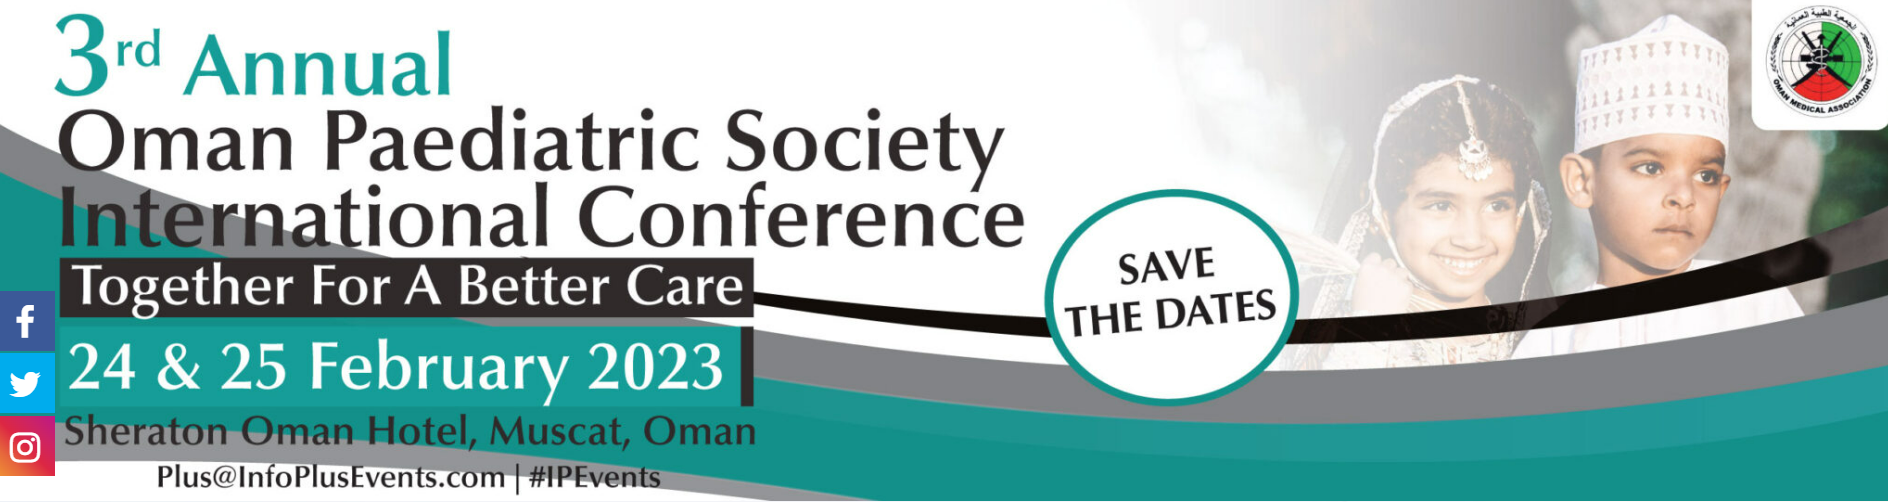 3rd Annual Oman Pediatric Society International Conference, Muscat, Oman